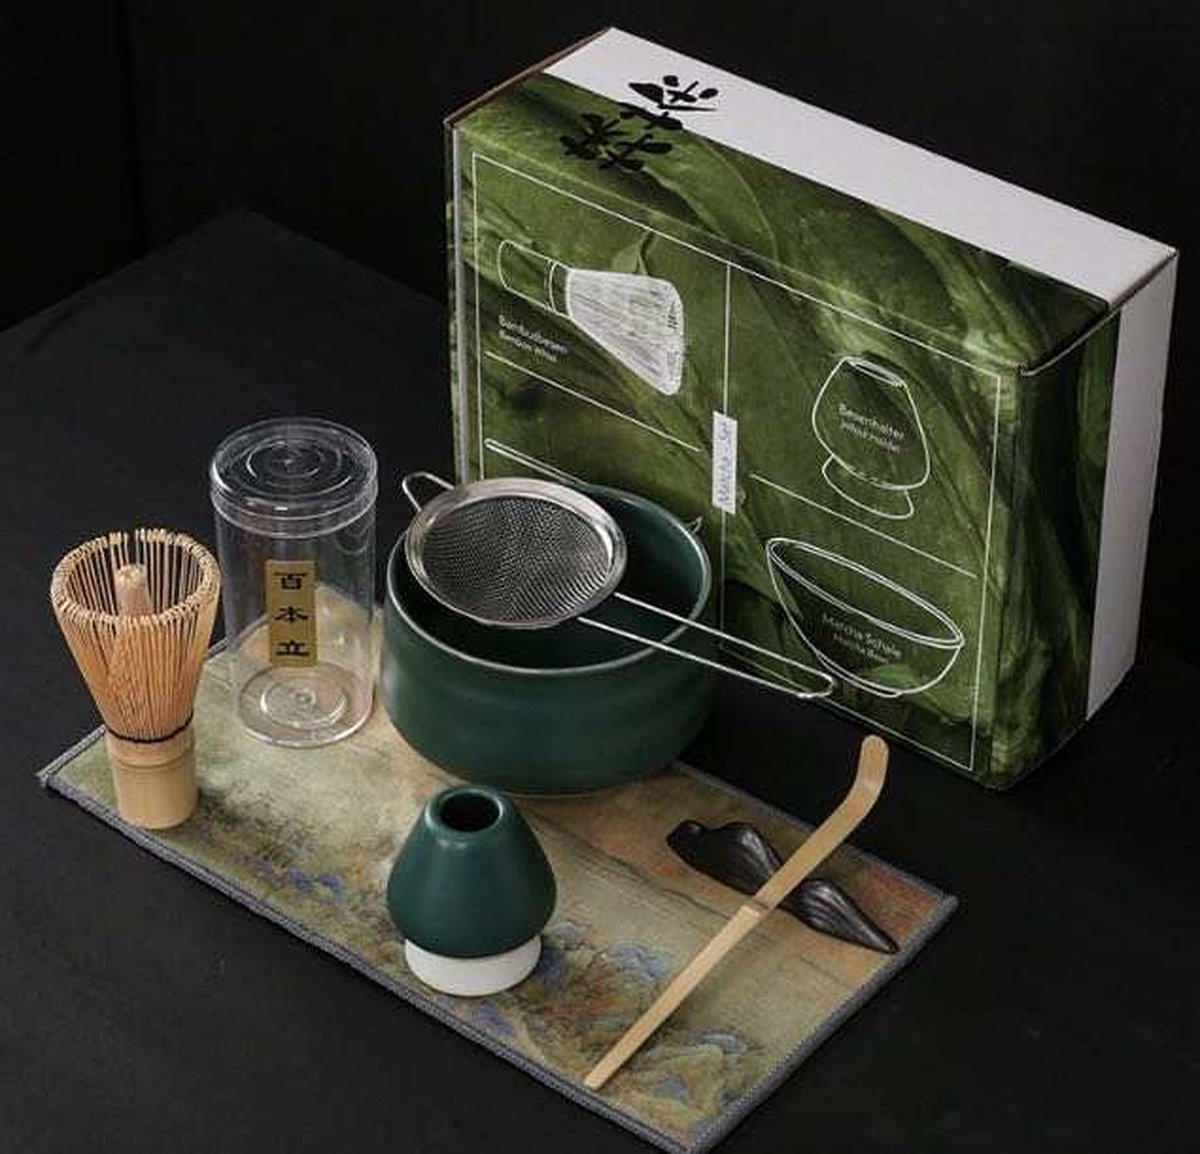 7 Delig Unike Matcha thee set,Complete set als voor cadeau - subarashi